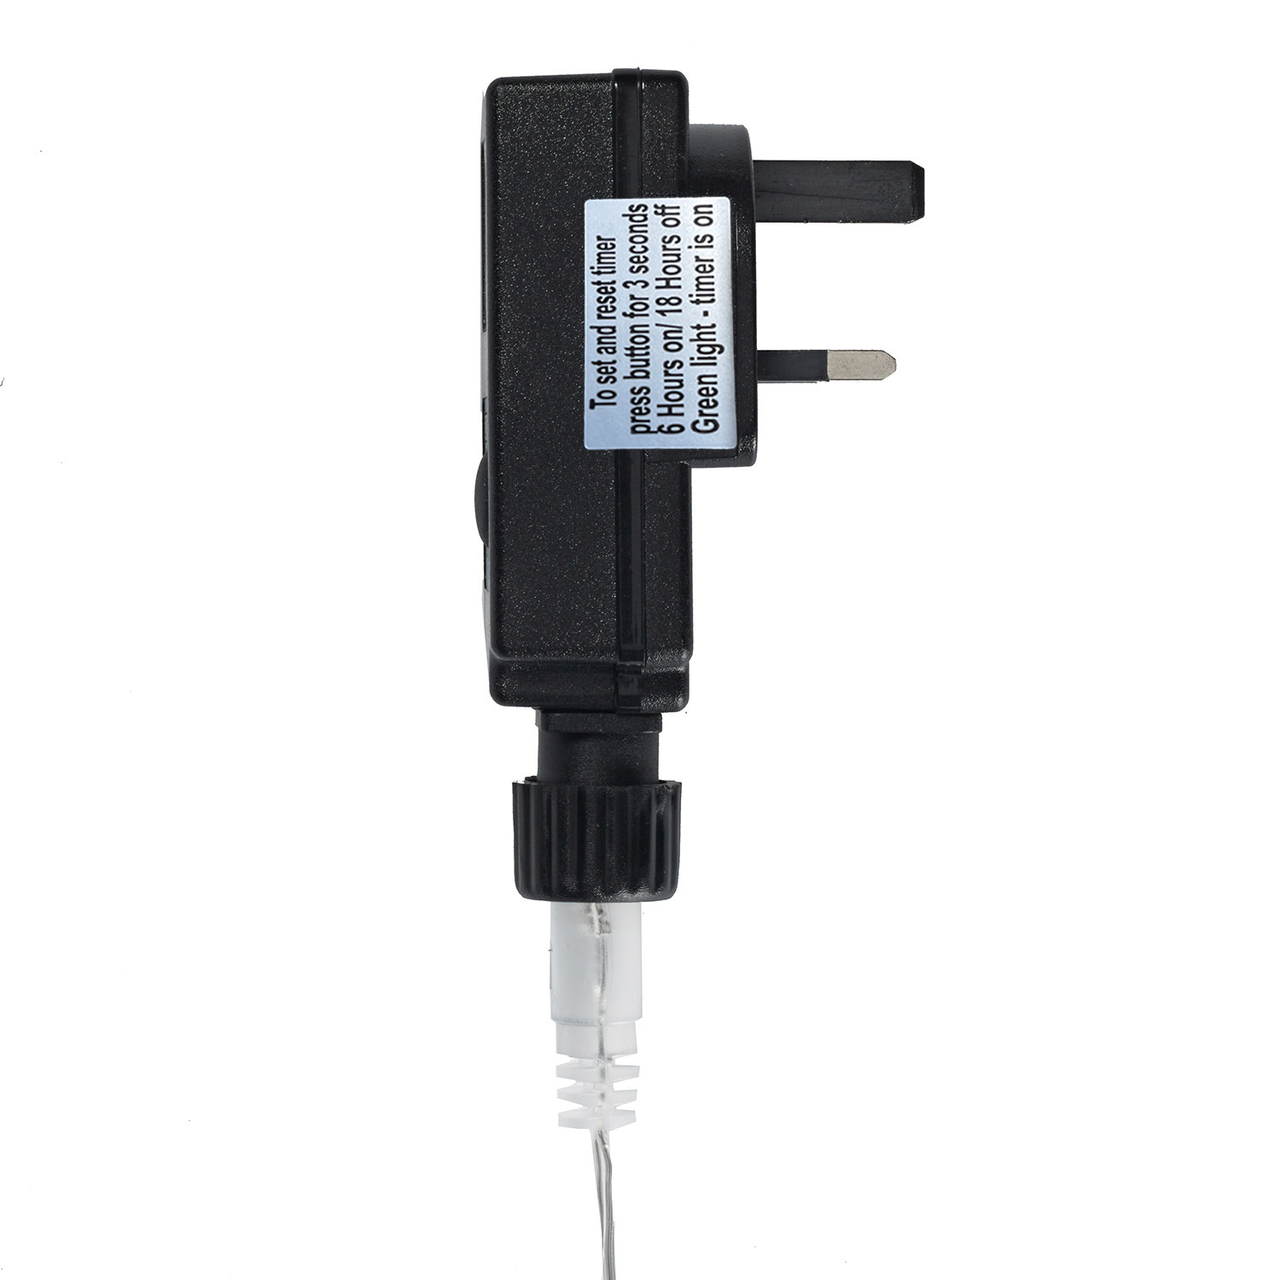 Essential Connect 31v Transformer Plug with Timer